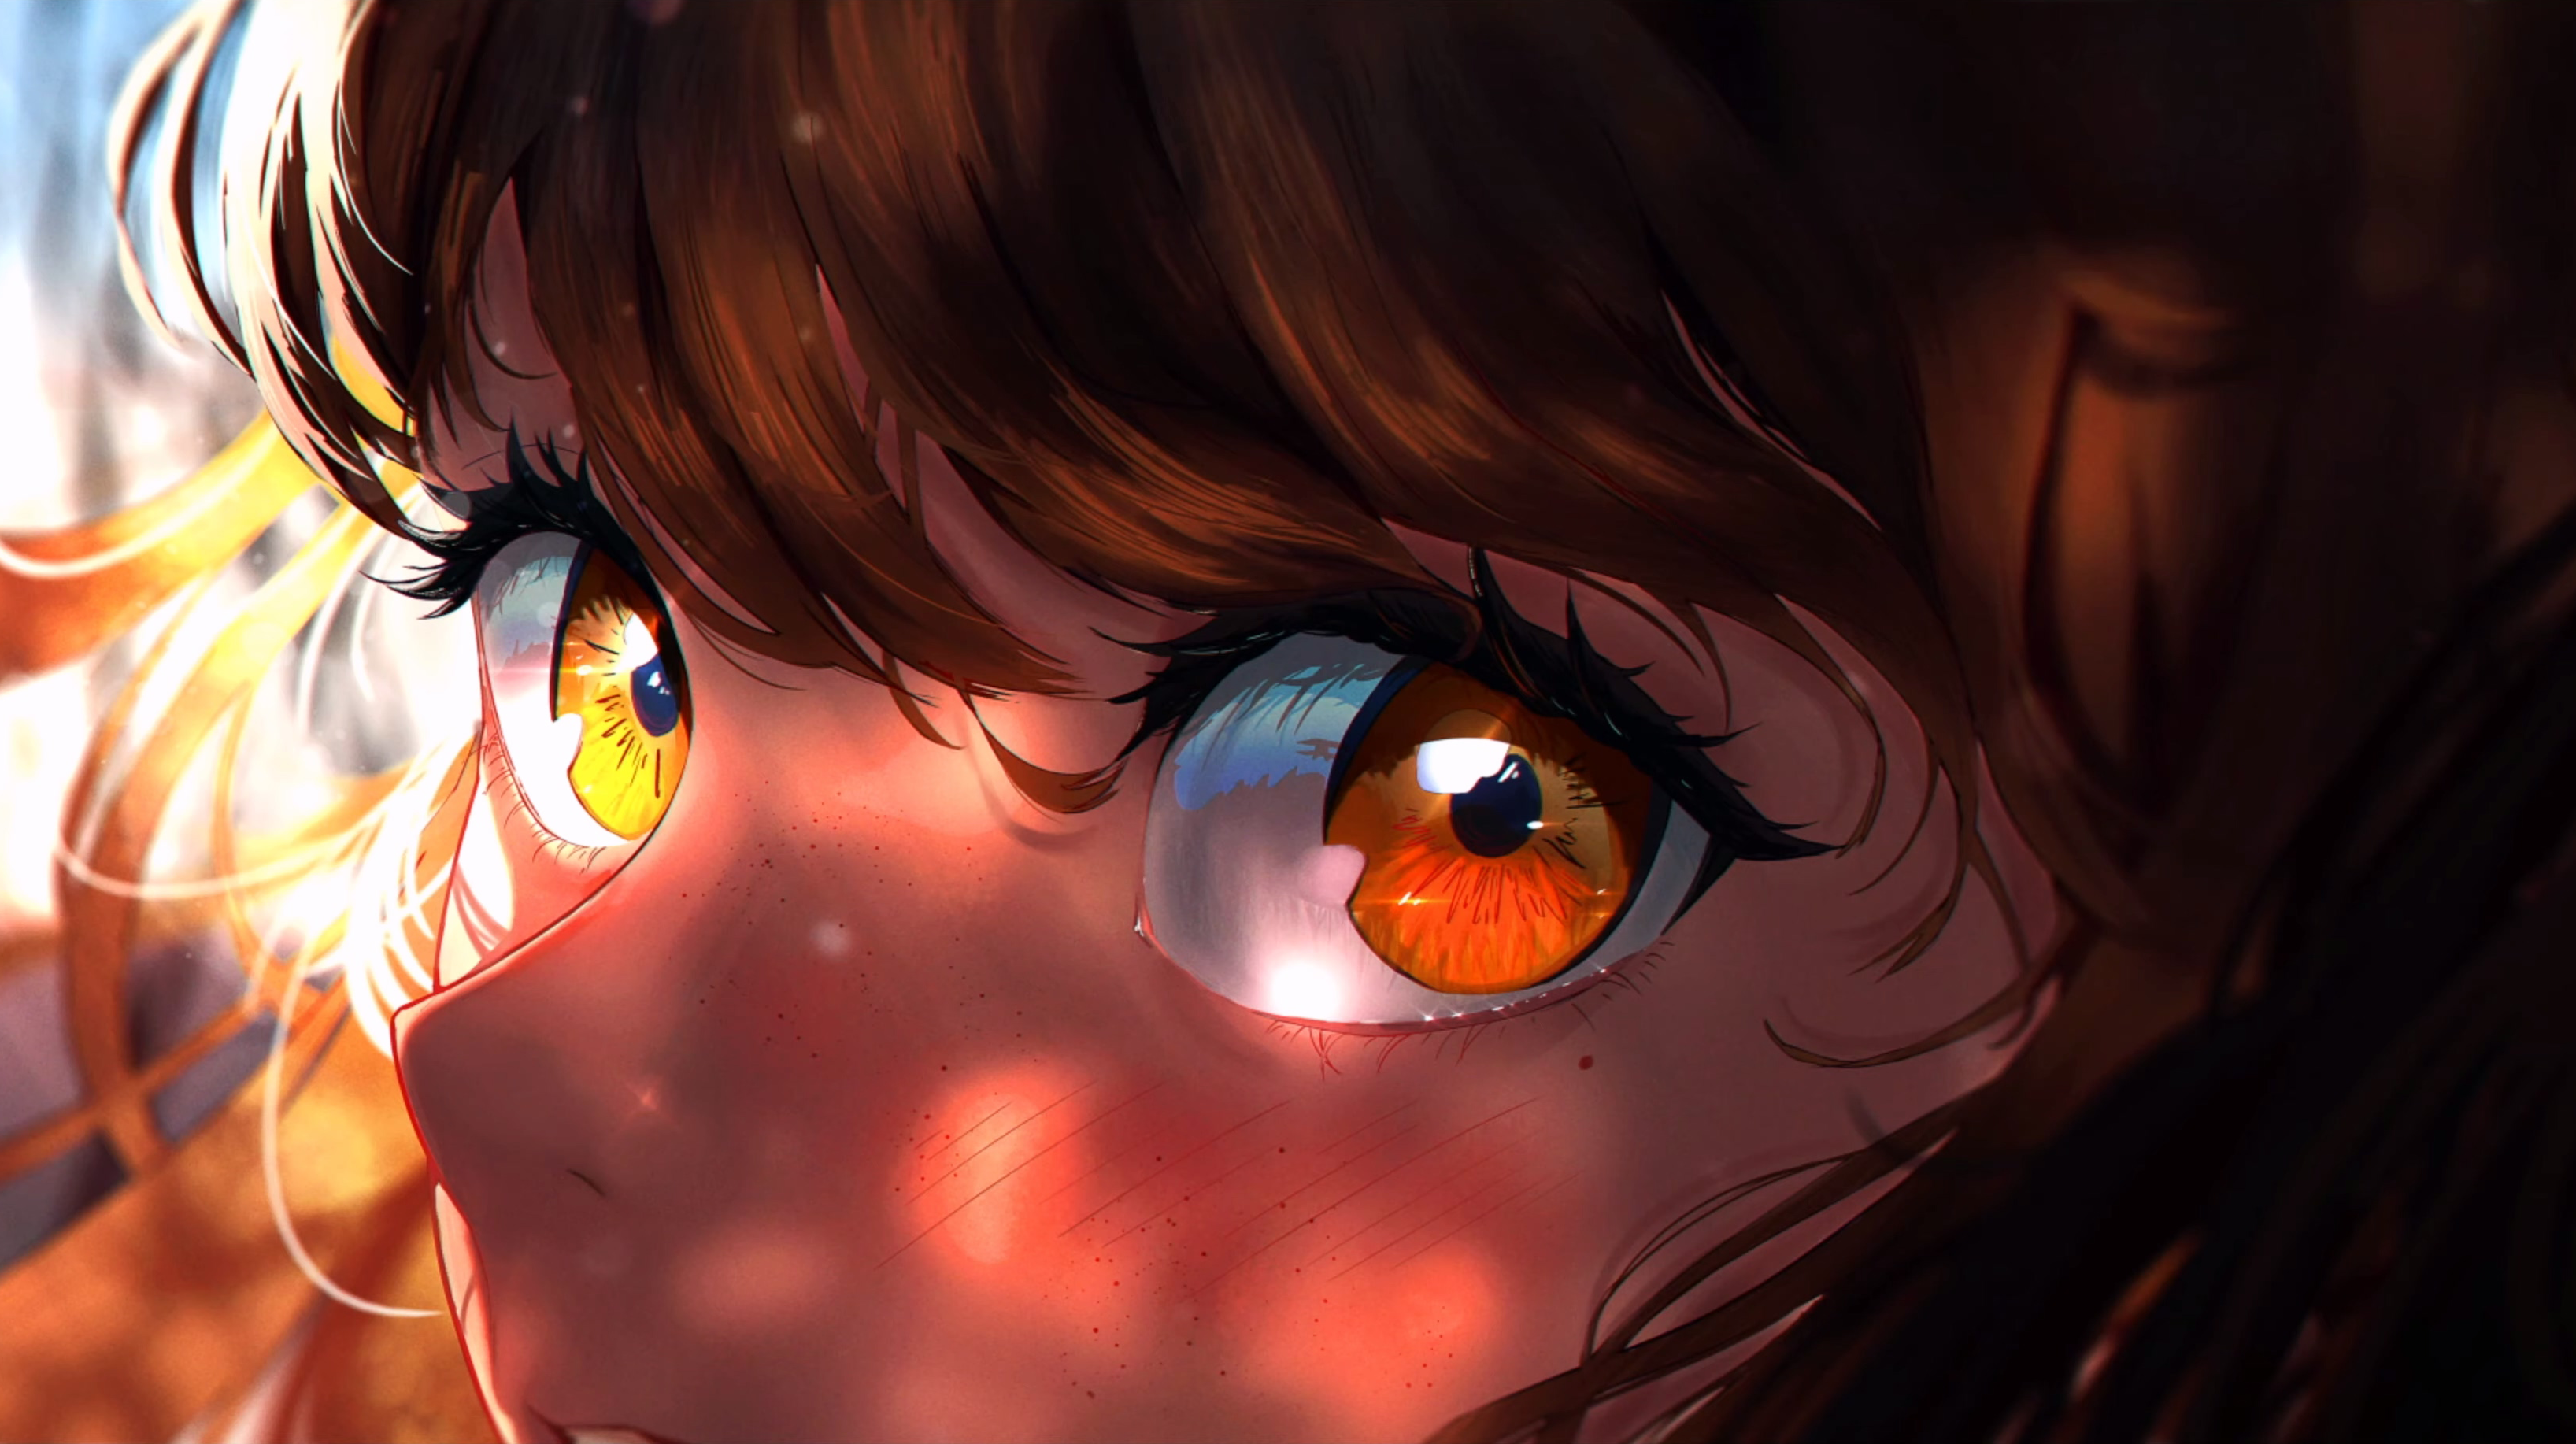 SARTG Digital Art Artwork Illustration Anime Anime Girls Eyes Closeup Looking At Viewer Freckles Fac 3272x1834